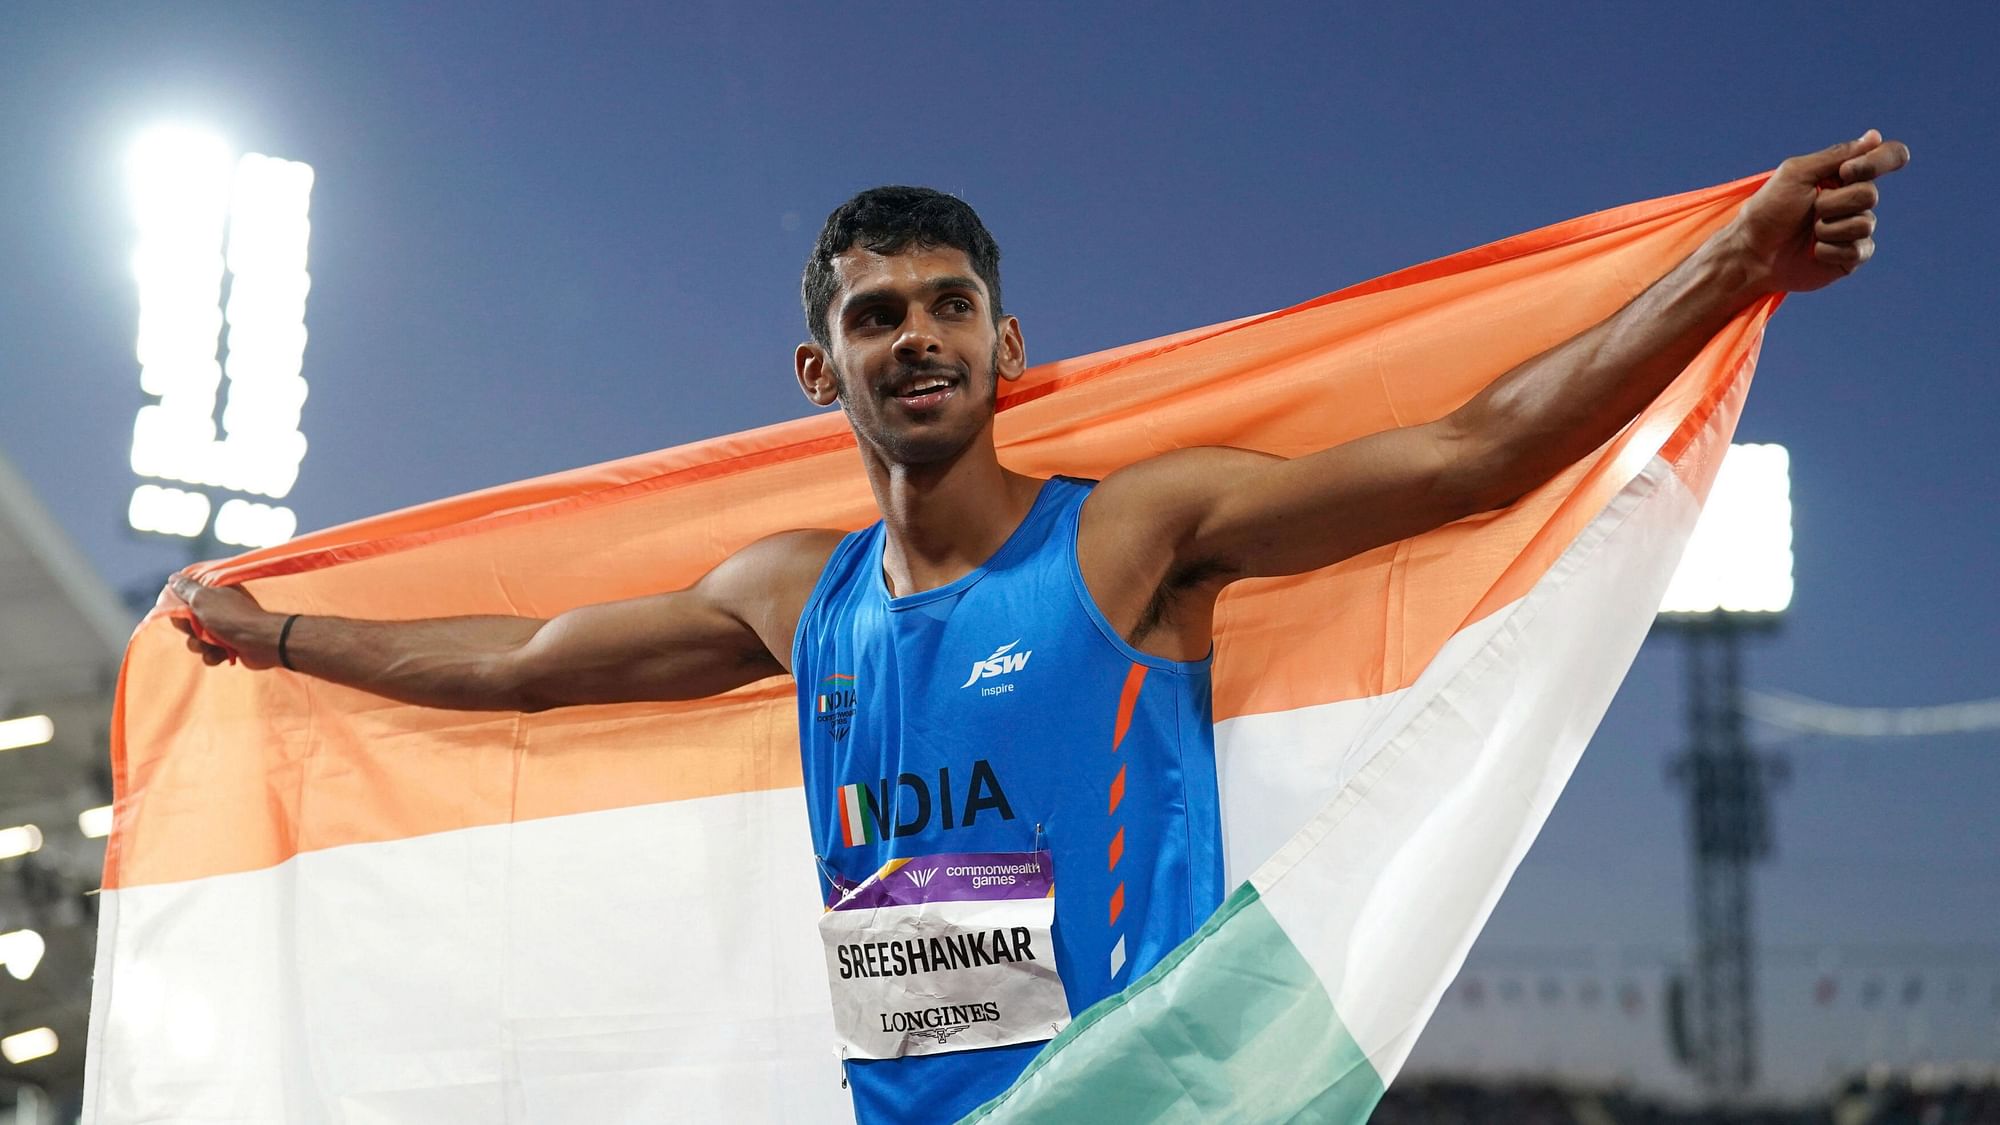 <div class="paragraphs"><p>Murali Sreeshankar won a long jump silver at the 2022 Commonwealth Games.</p></div>